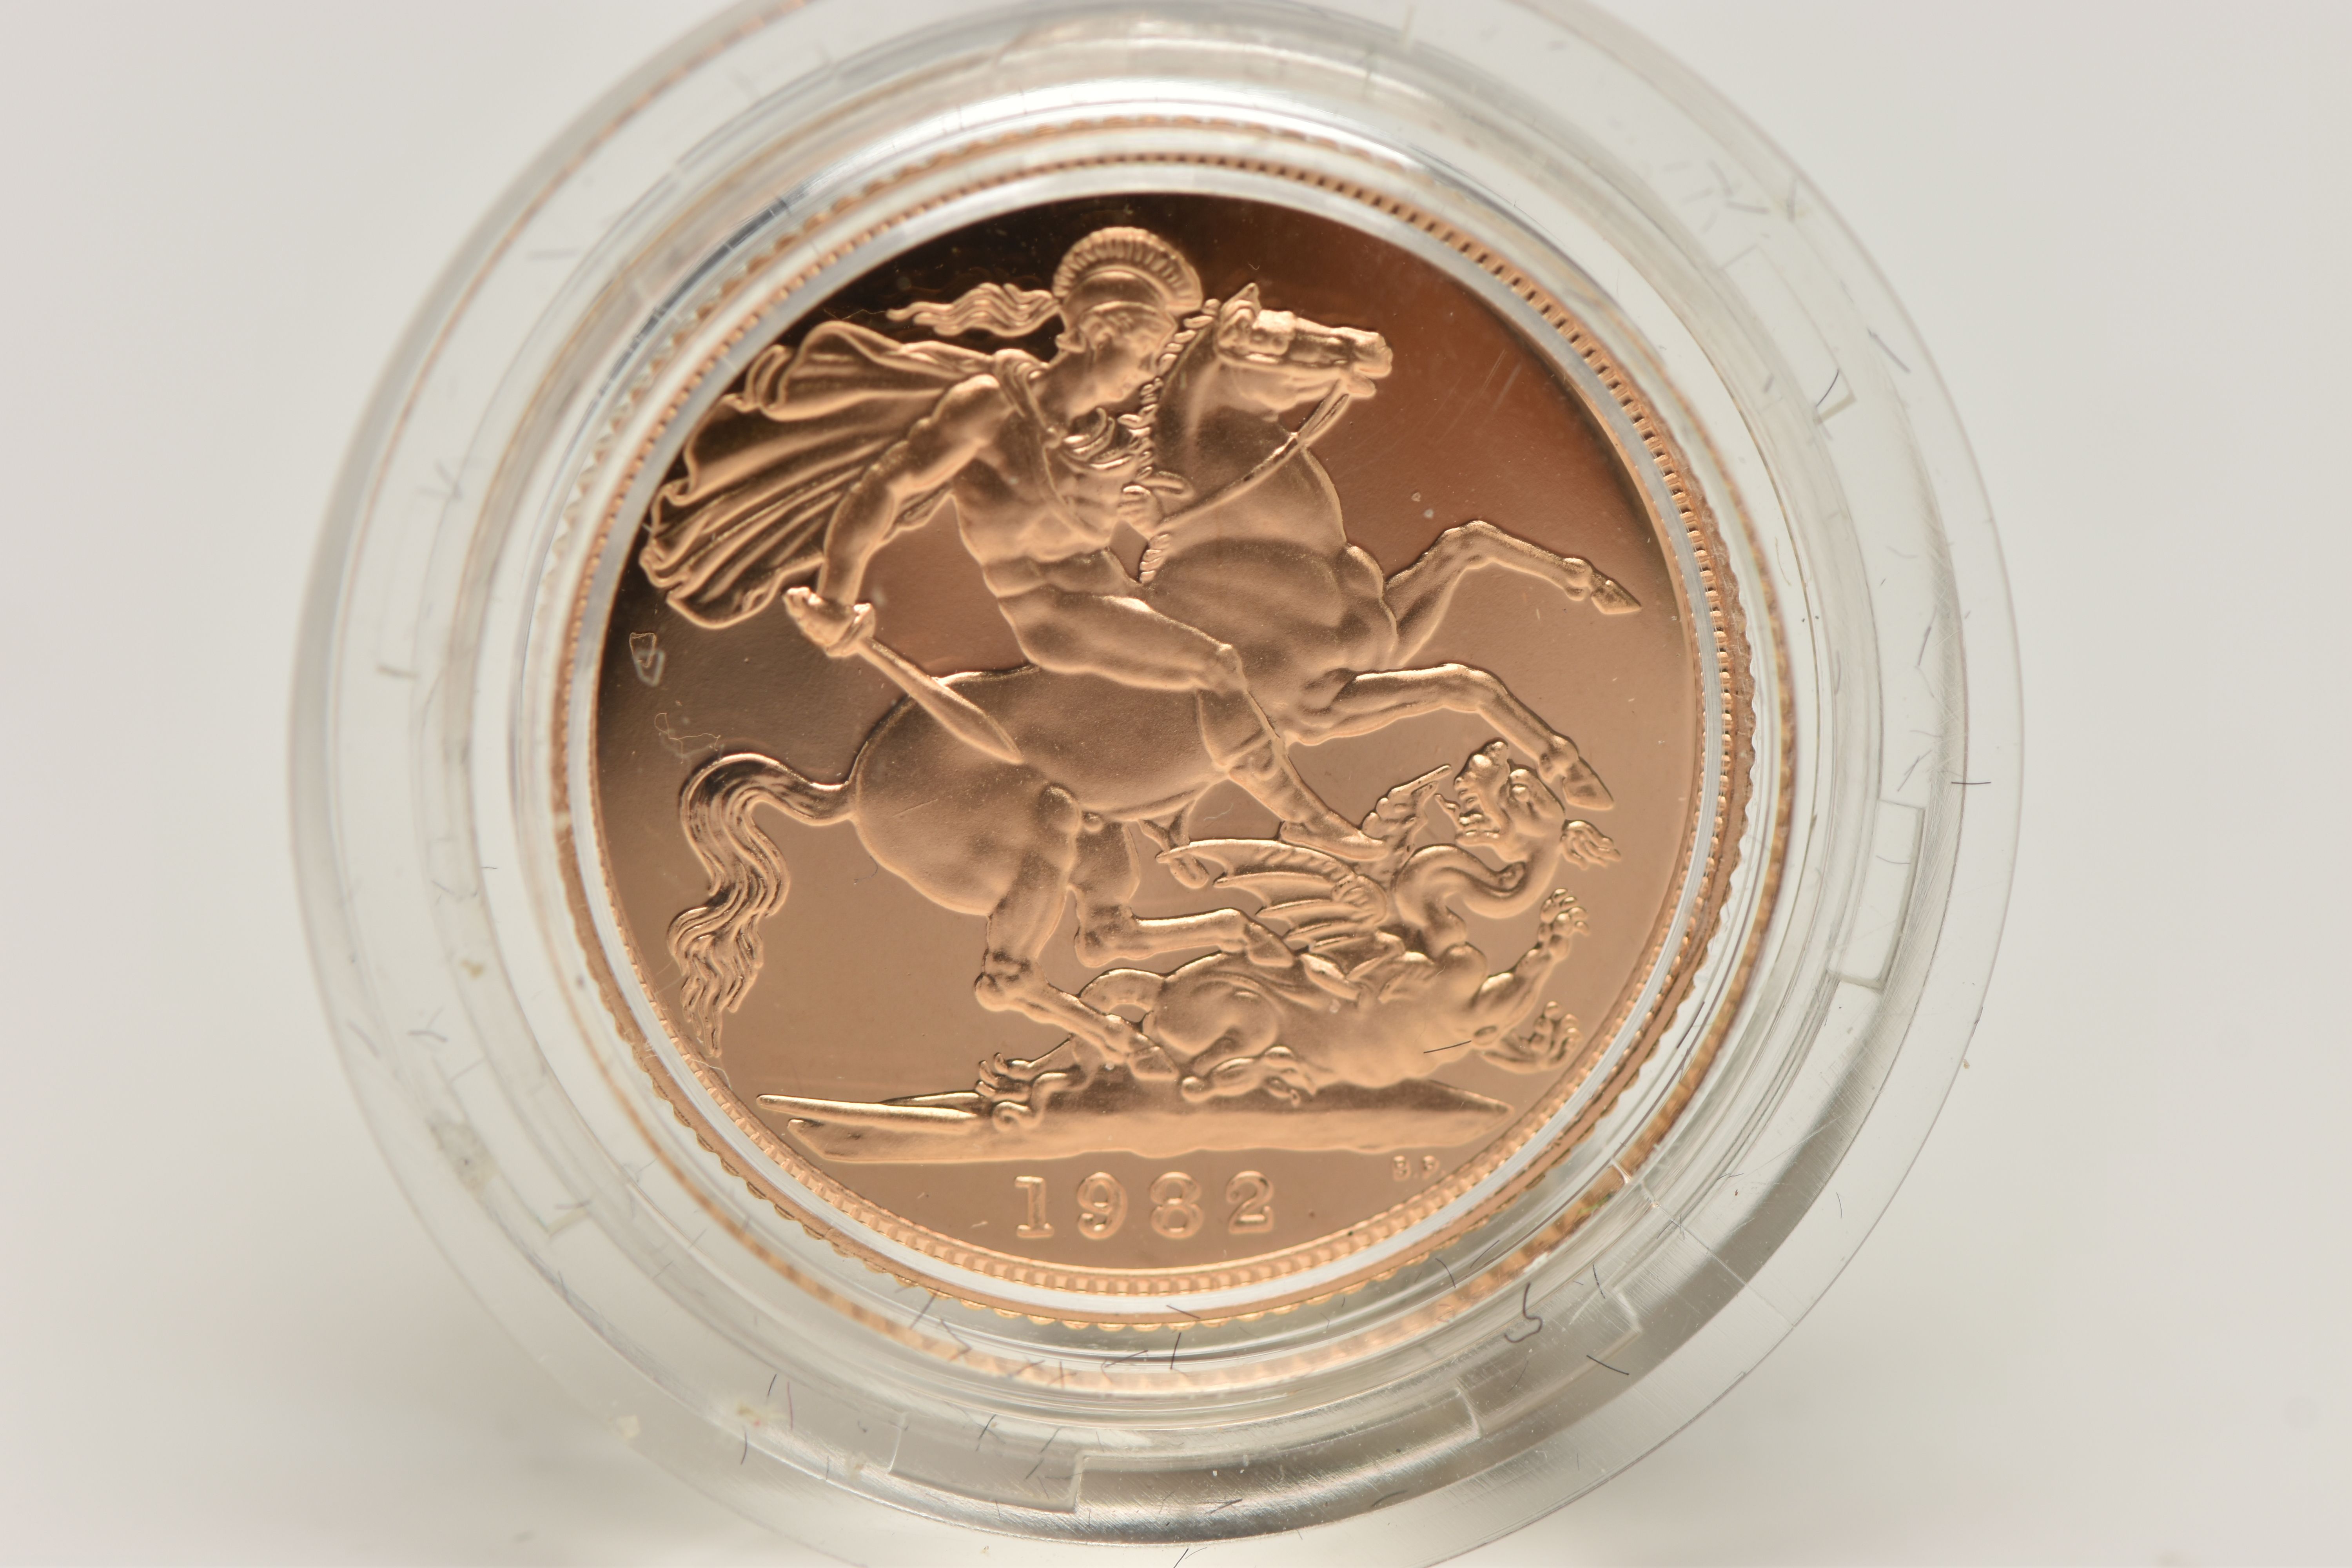 ROYAL MINT FULL GOLD PROOF SOVEREIGN COIN QUEEN ELIZABETH II 1982, .916 fine, 7.98 gram, 22.05mm